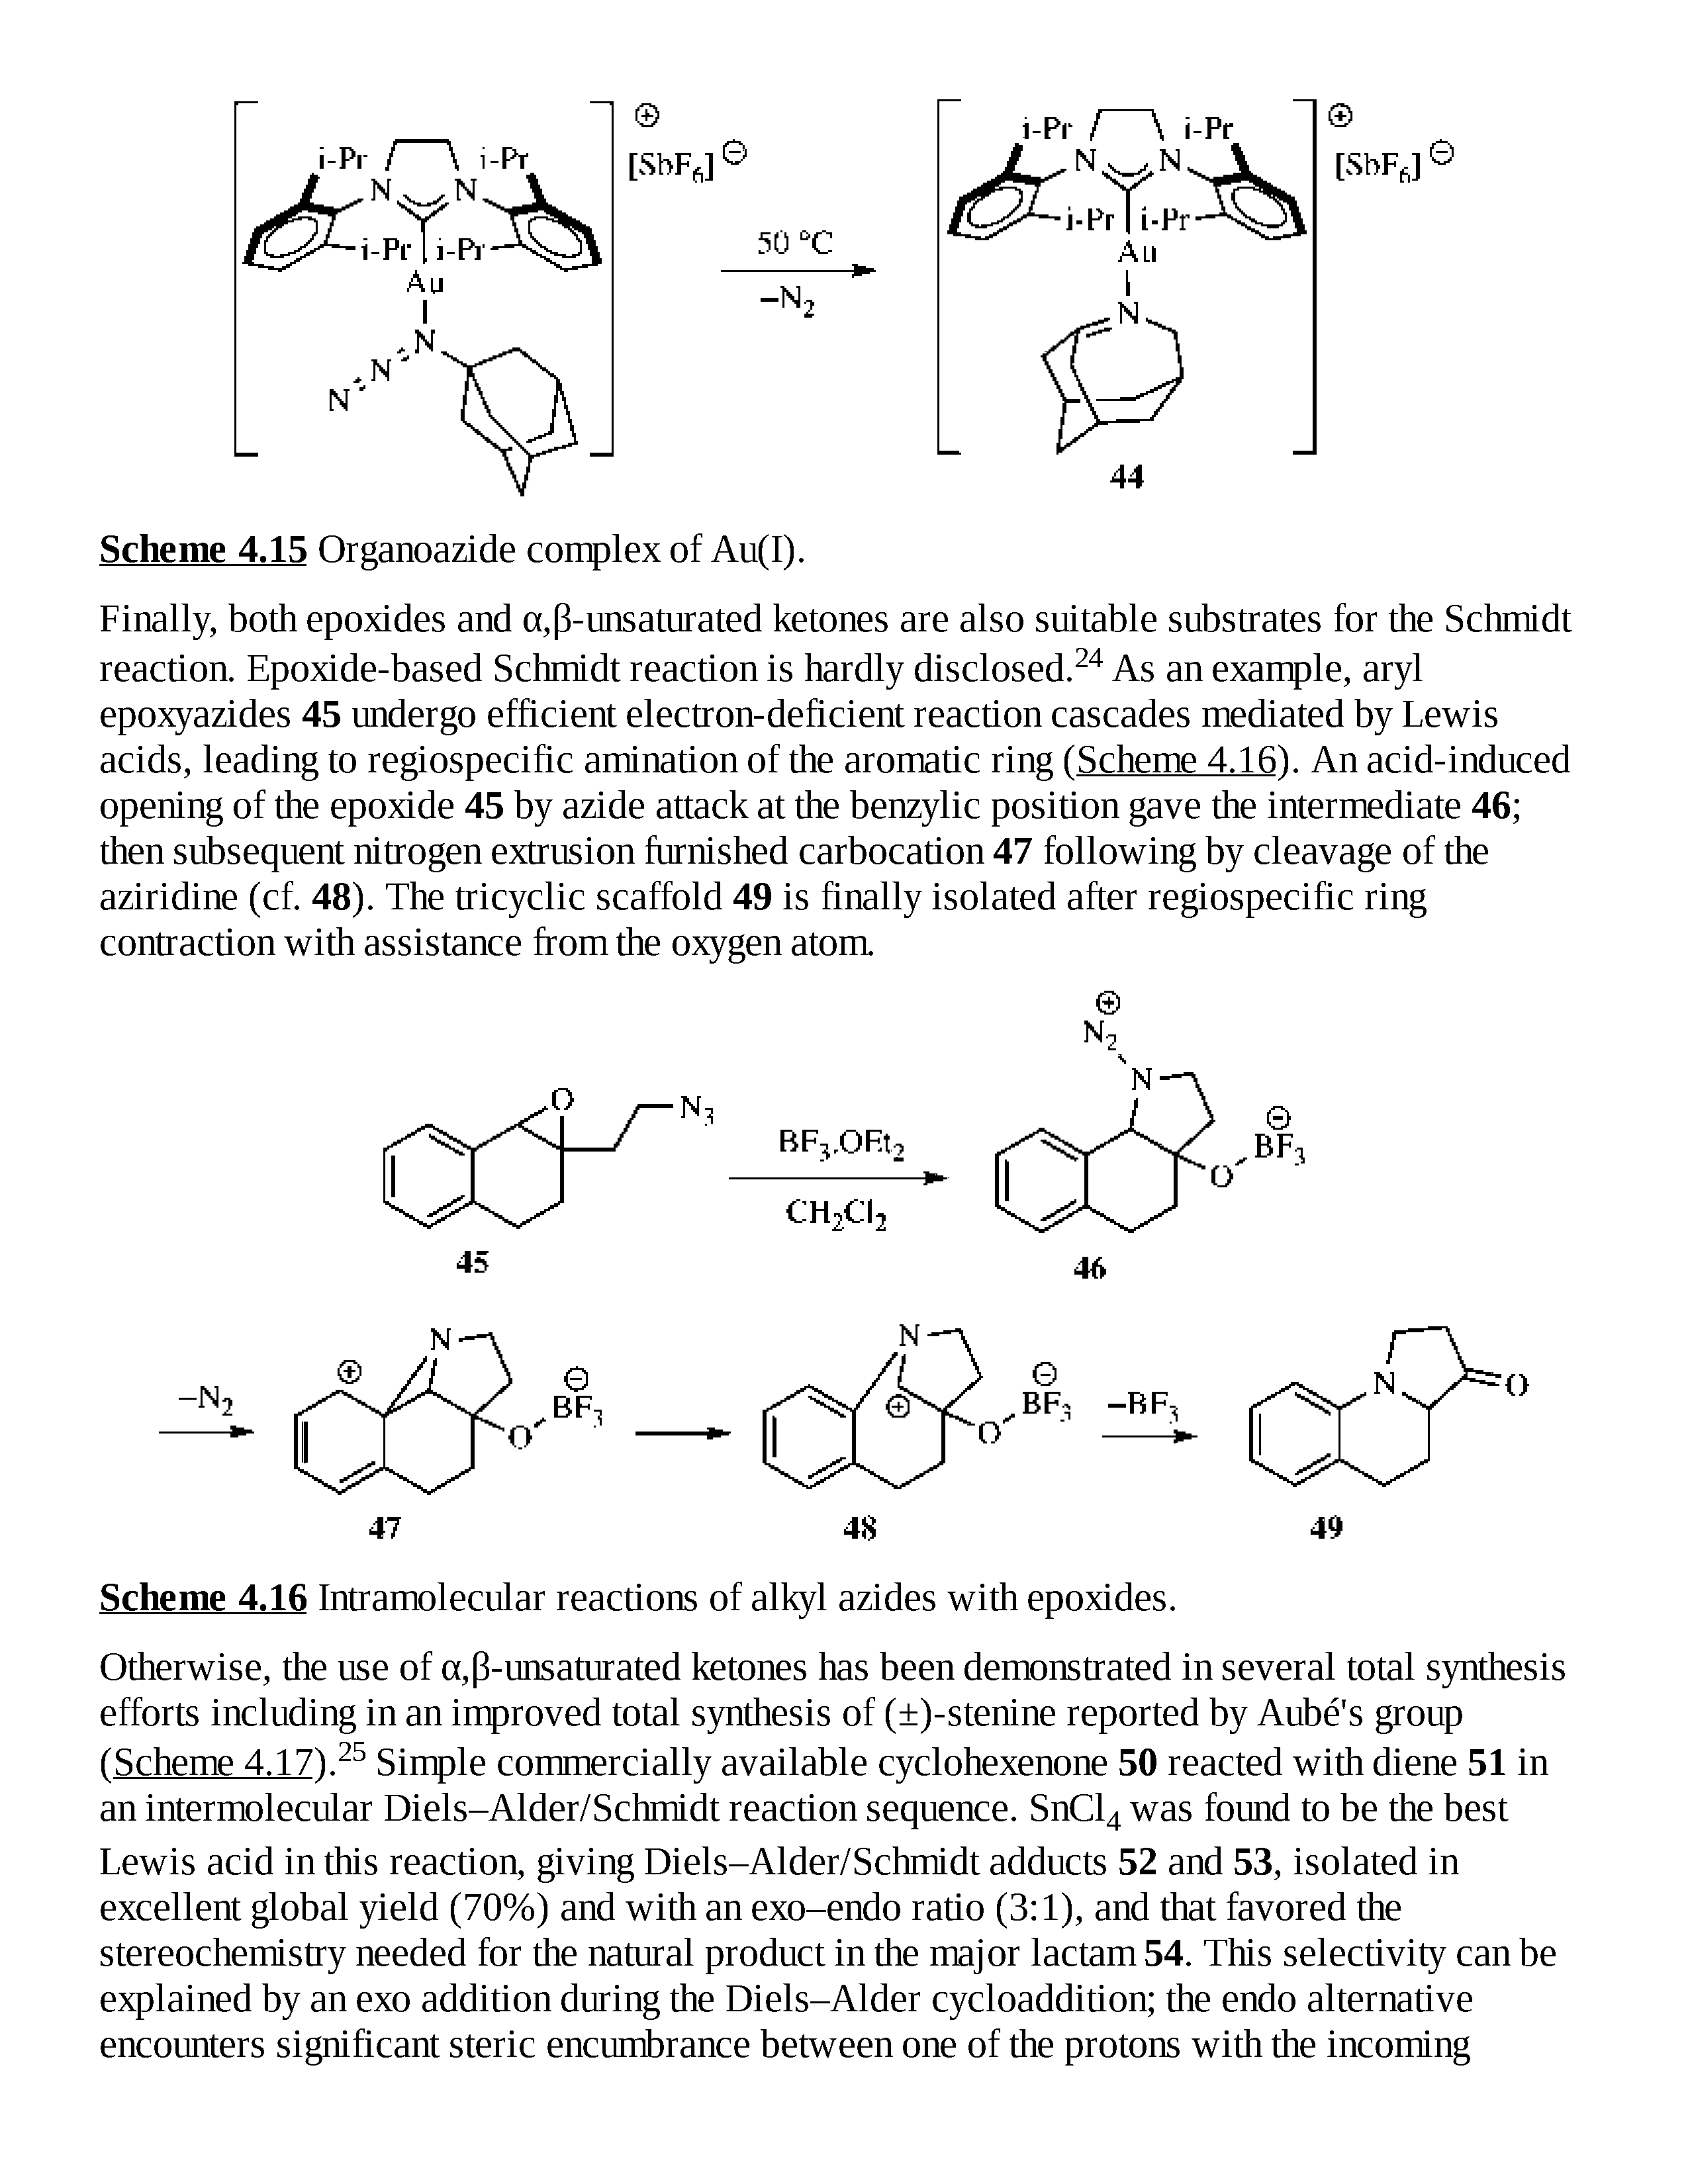 Scheme 4.16 Intramolecular reactions of alkyl azides with epoxides.